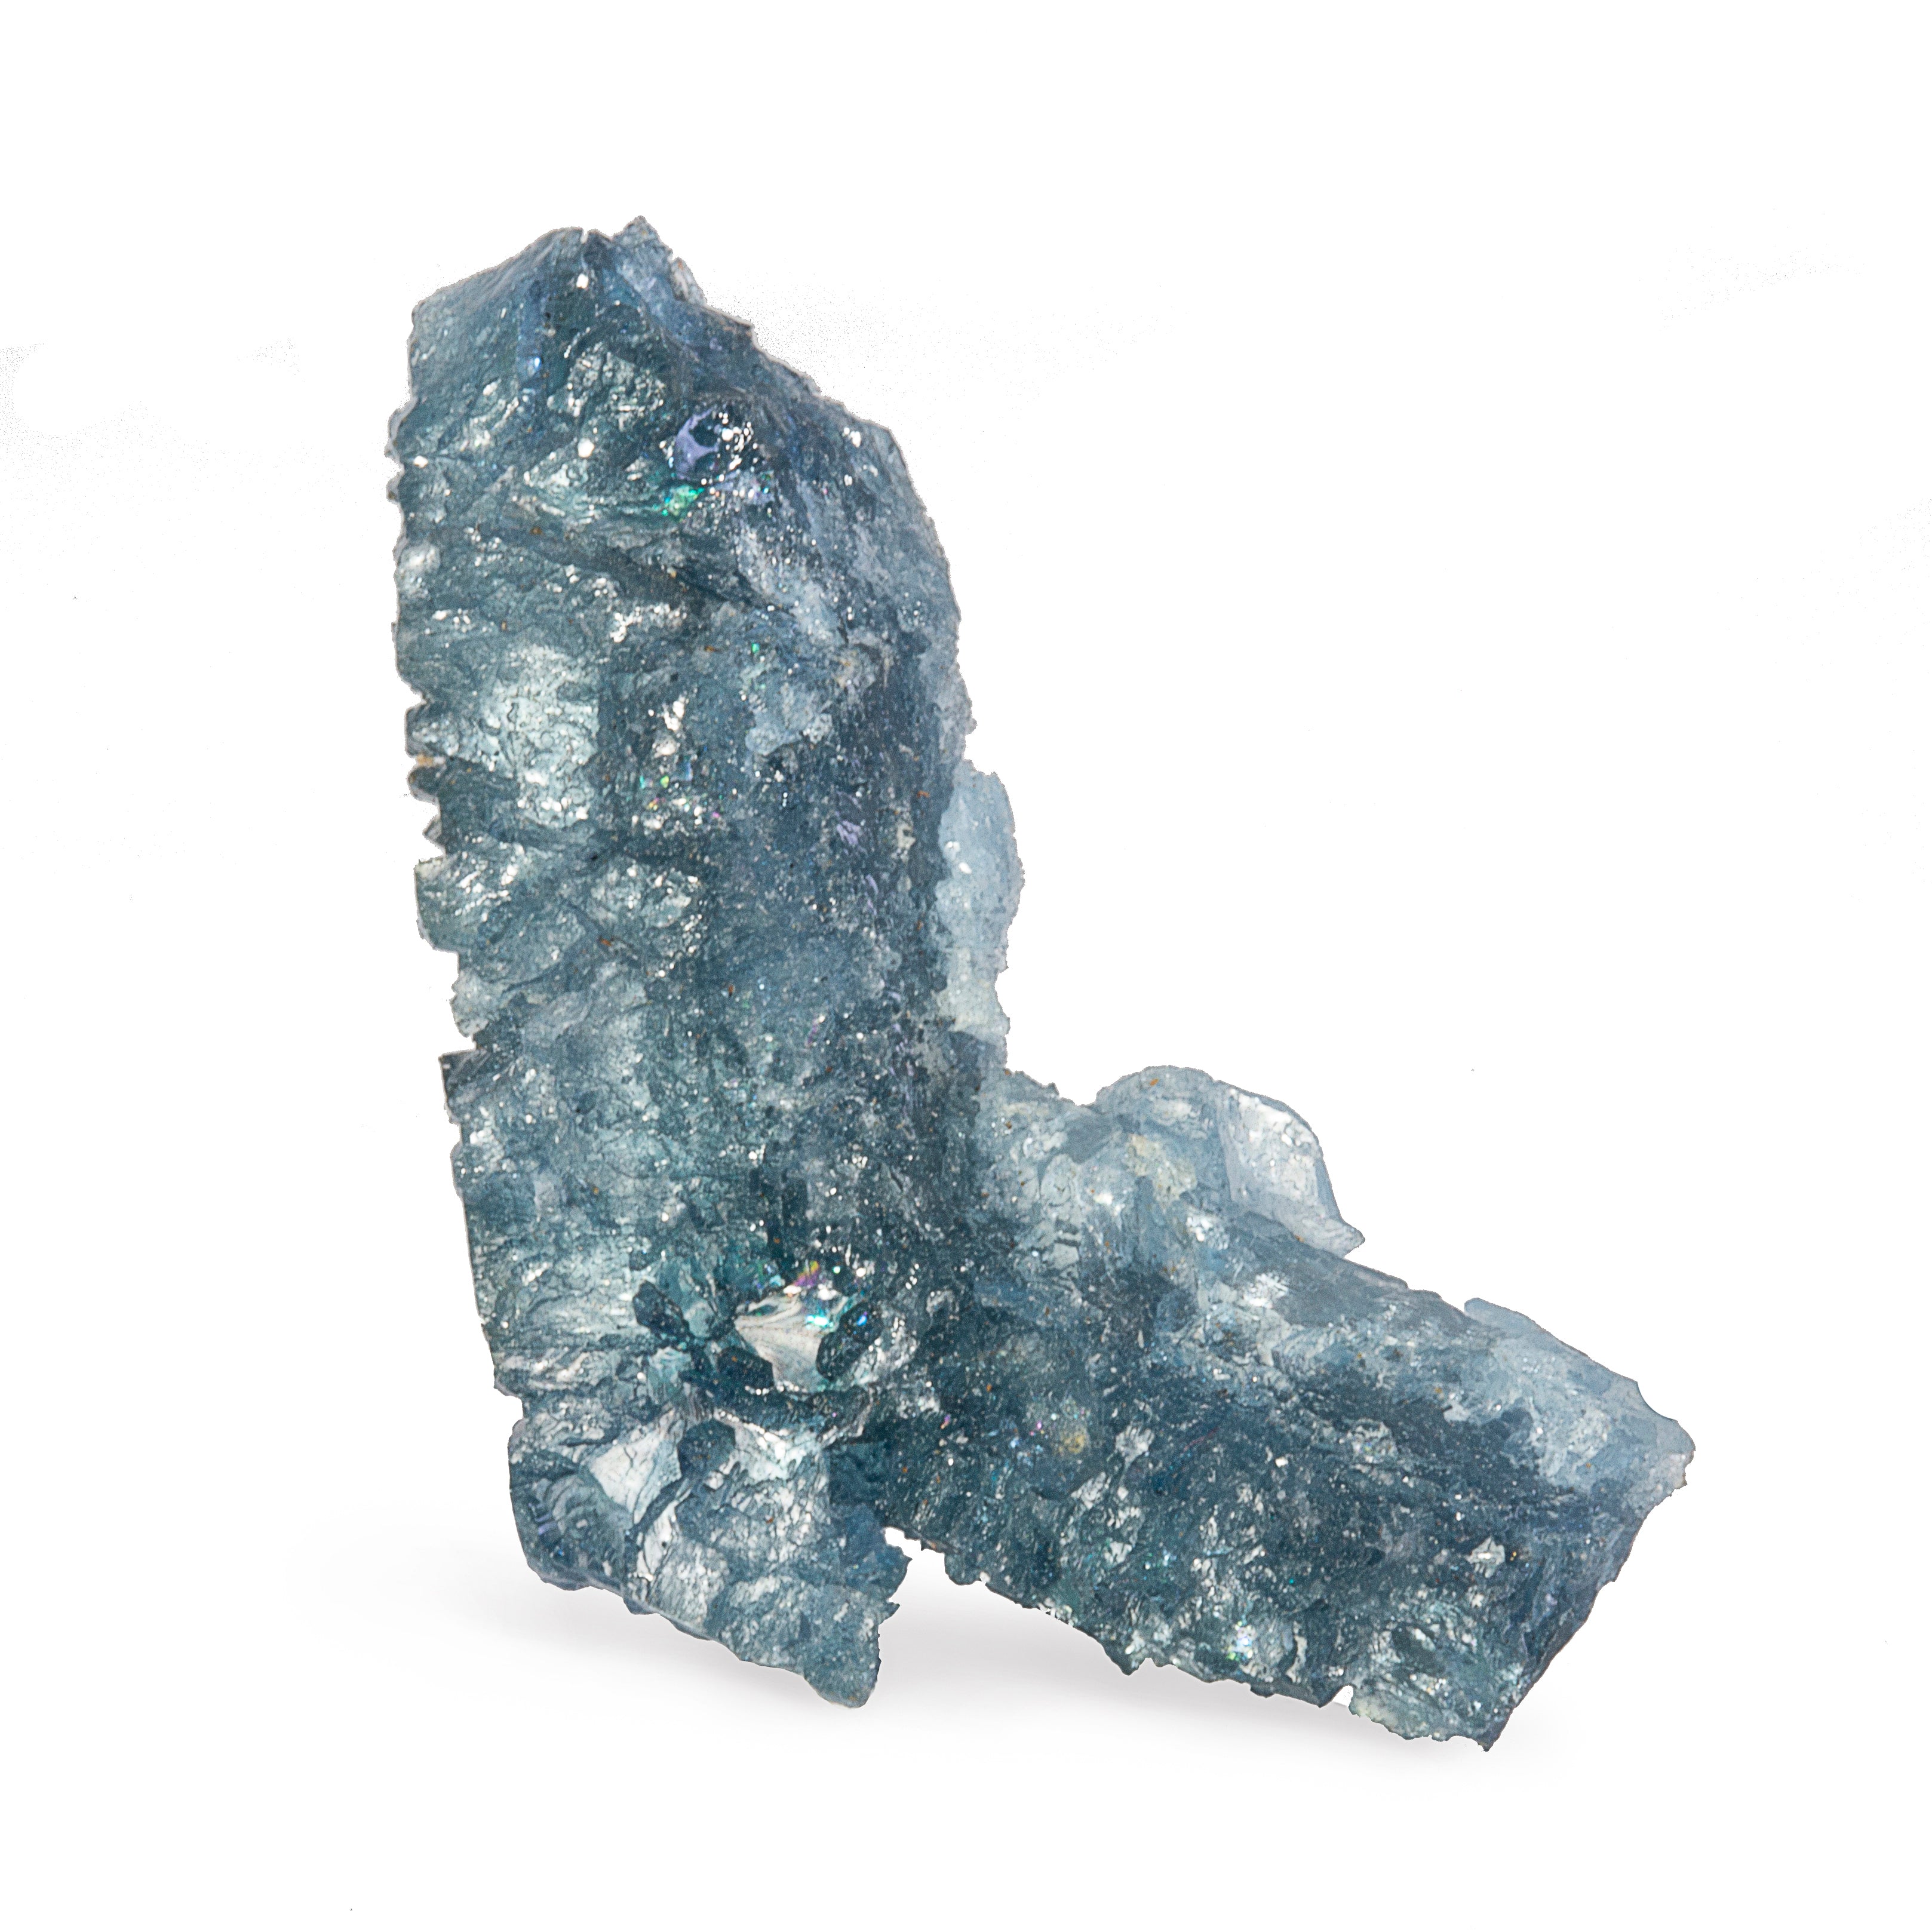 Cristalli curativi — Blue Beryl